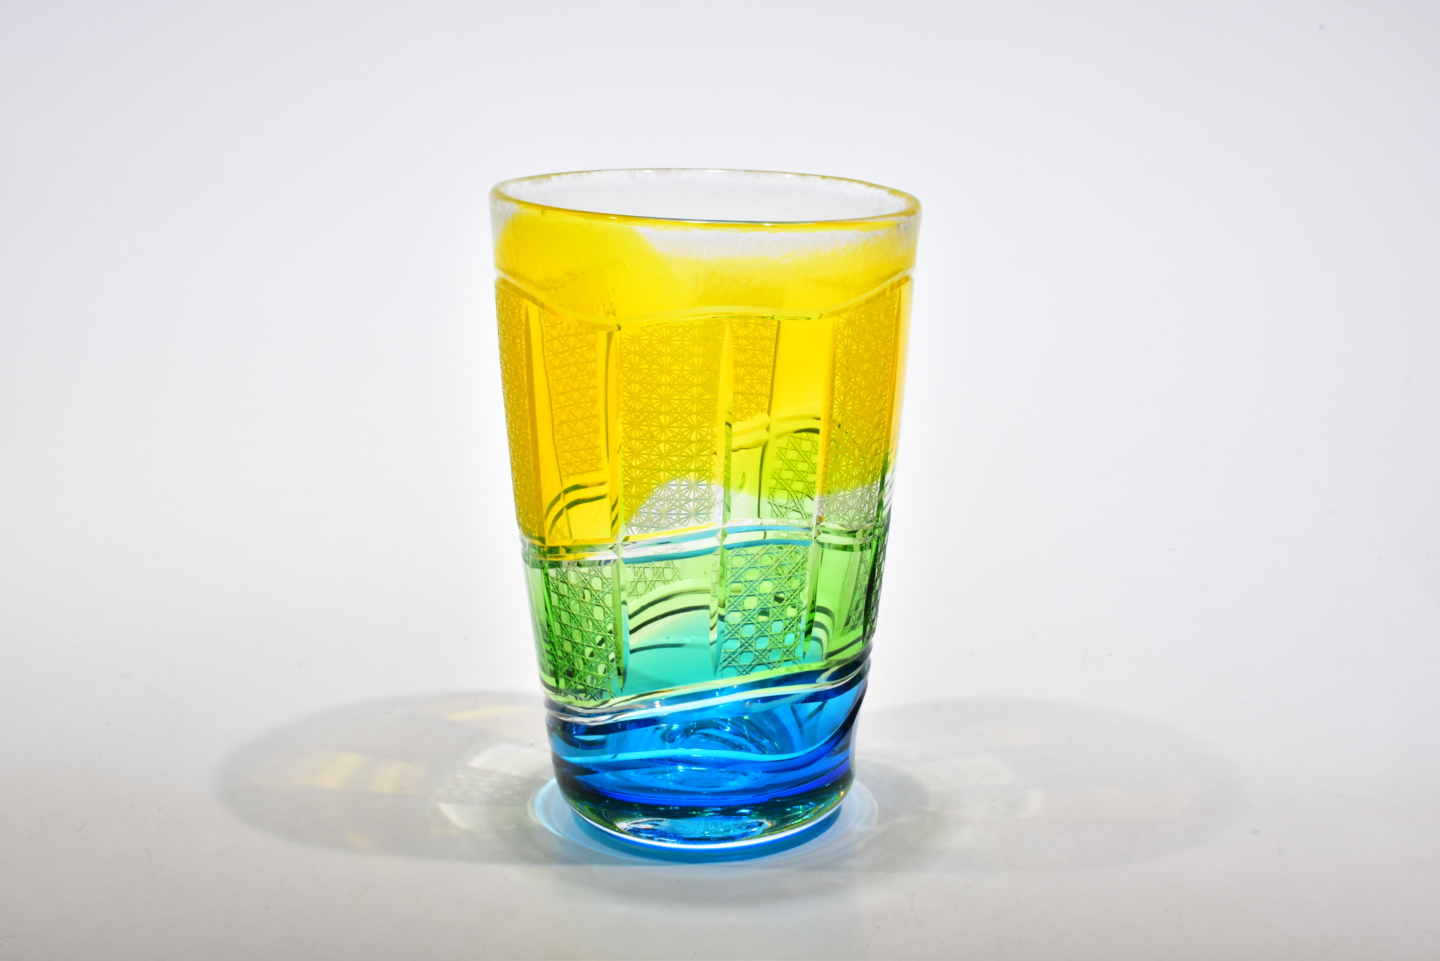 [Hanasyo] Experience the charm of Okinawa through this newly launched Ryukyu glass series processed with Edo Kiriko